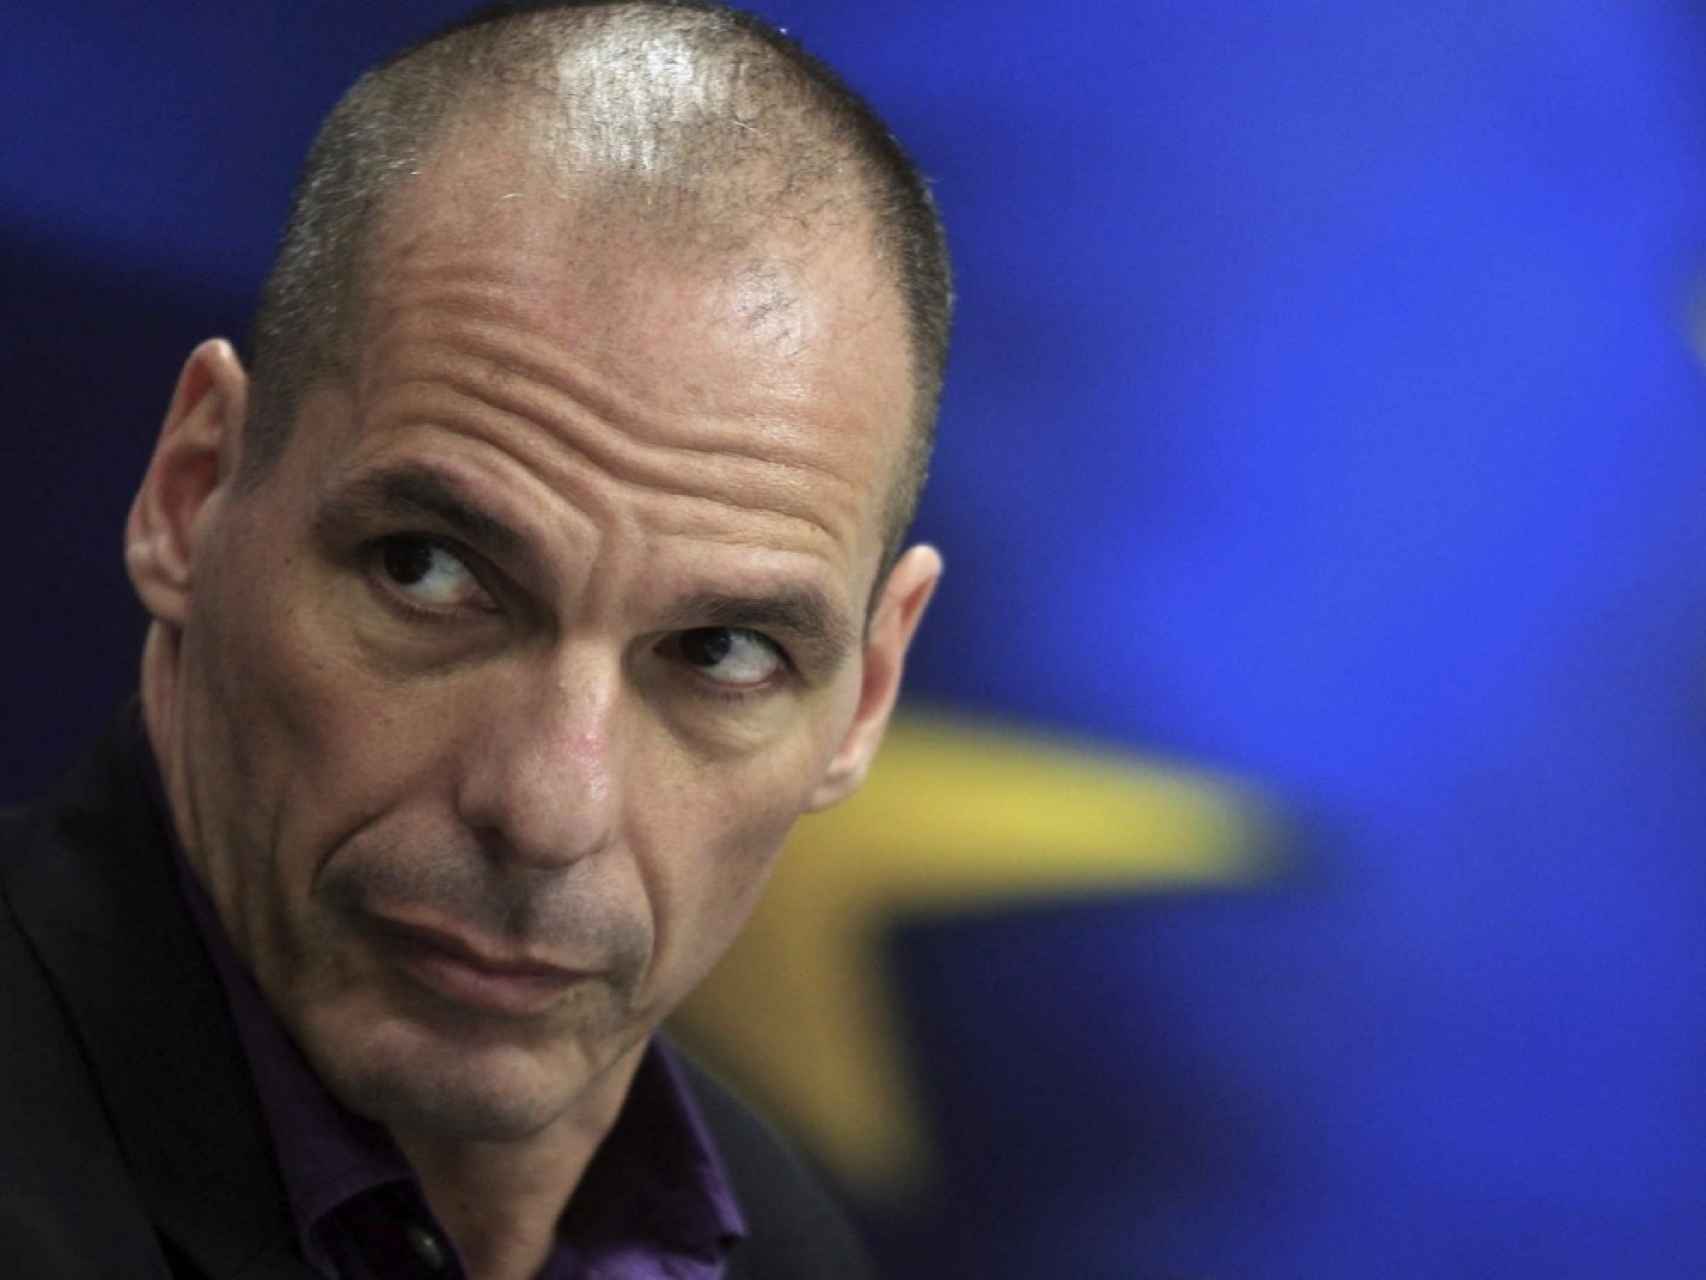 Varoufakis con la bandera de la Unión Europea de fondo.